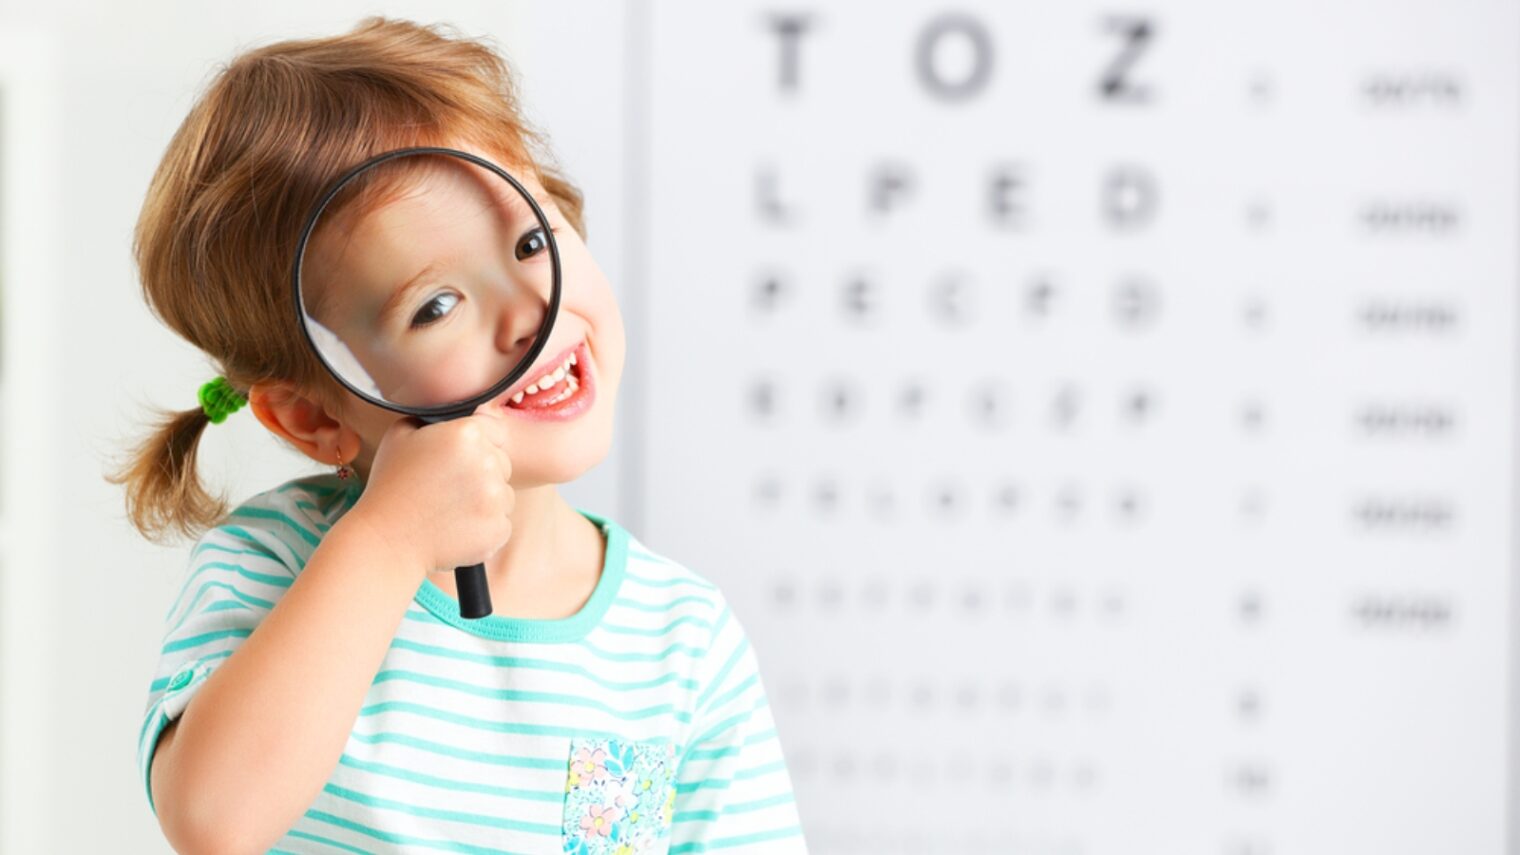 BinoVision is a new treatment for amblyopia. Image by Evgeny Atamanenko/Shutterstock.com